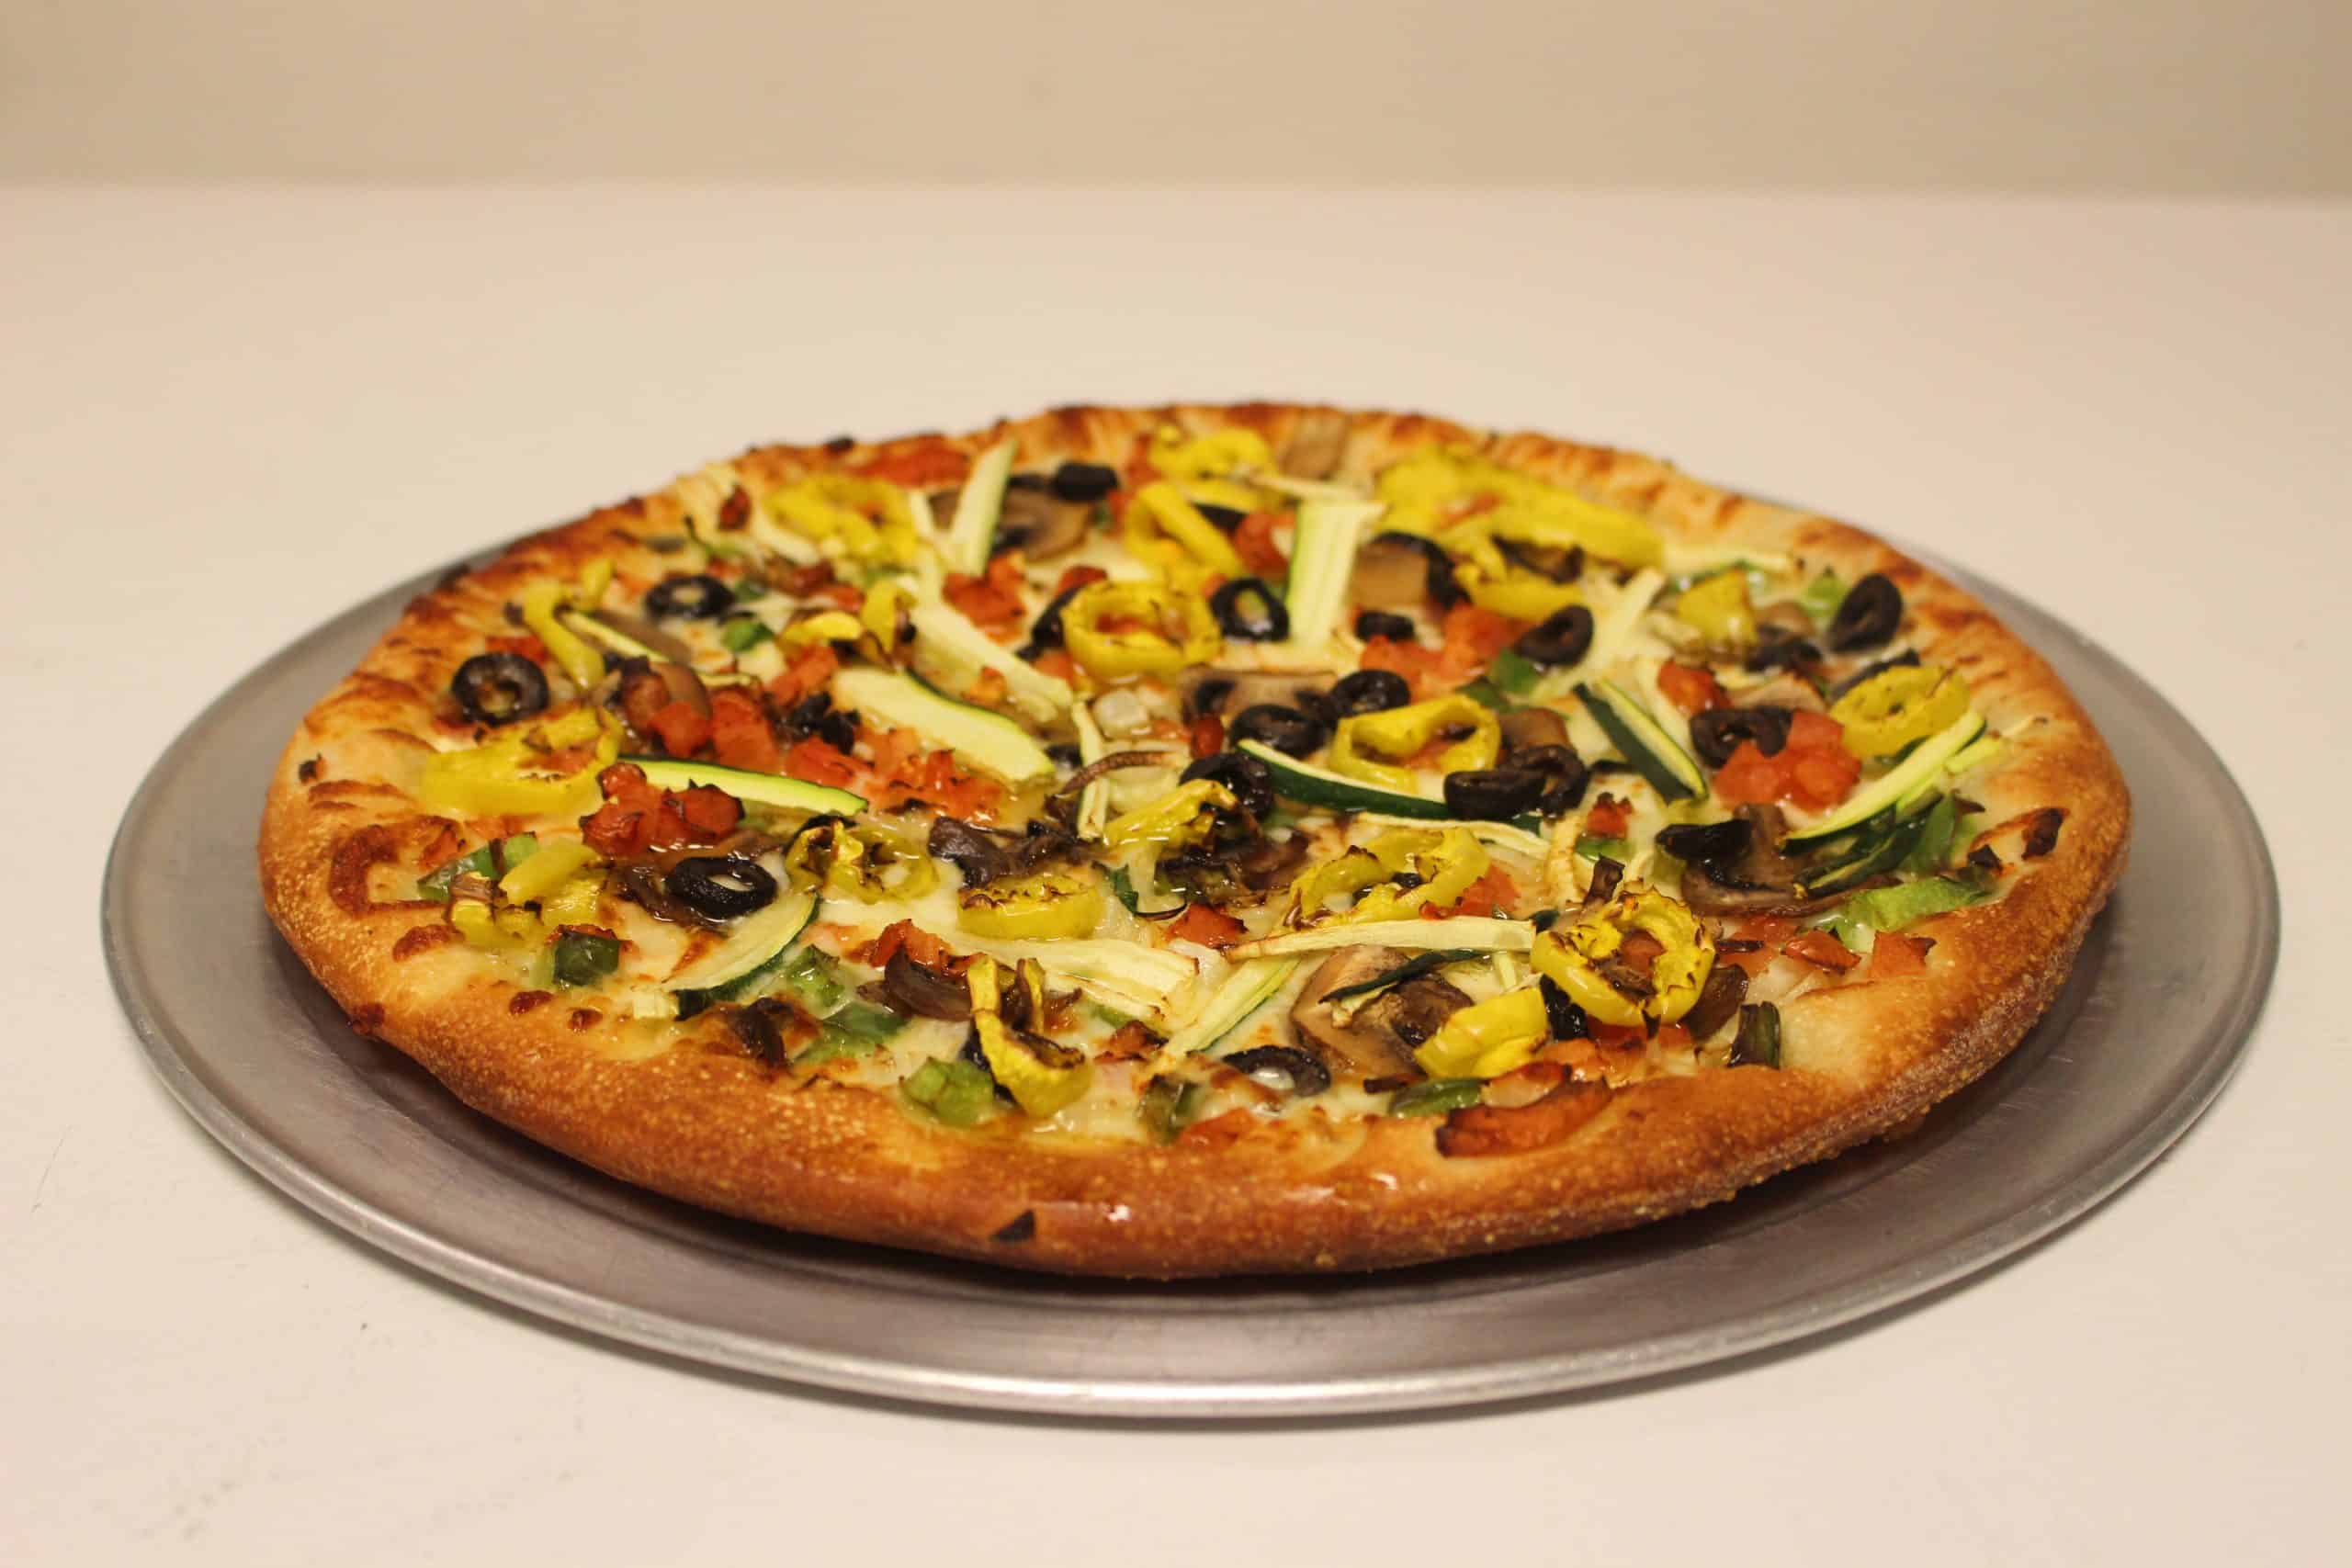 Image of Garden Veggie Pizza